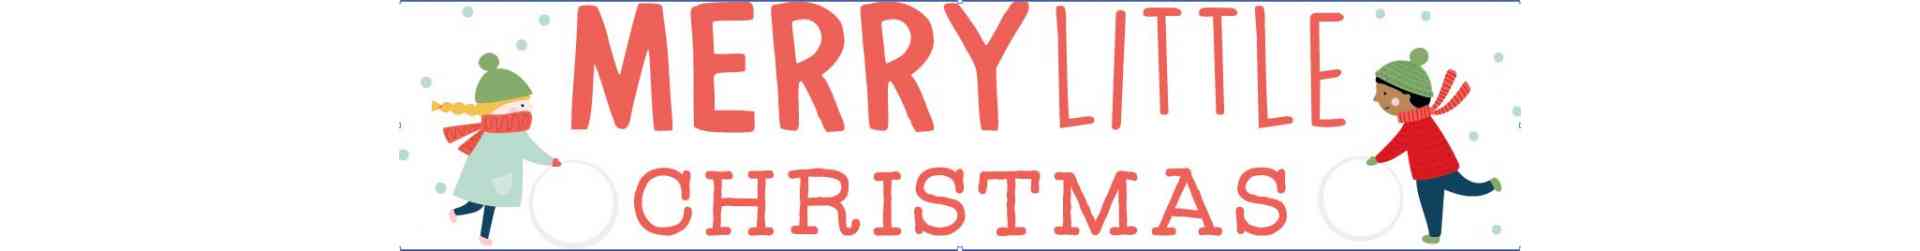 MERRY LITTLE CHRISTMAS